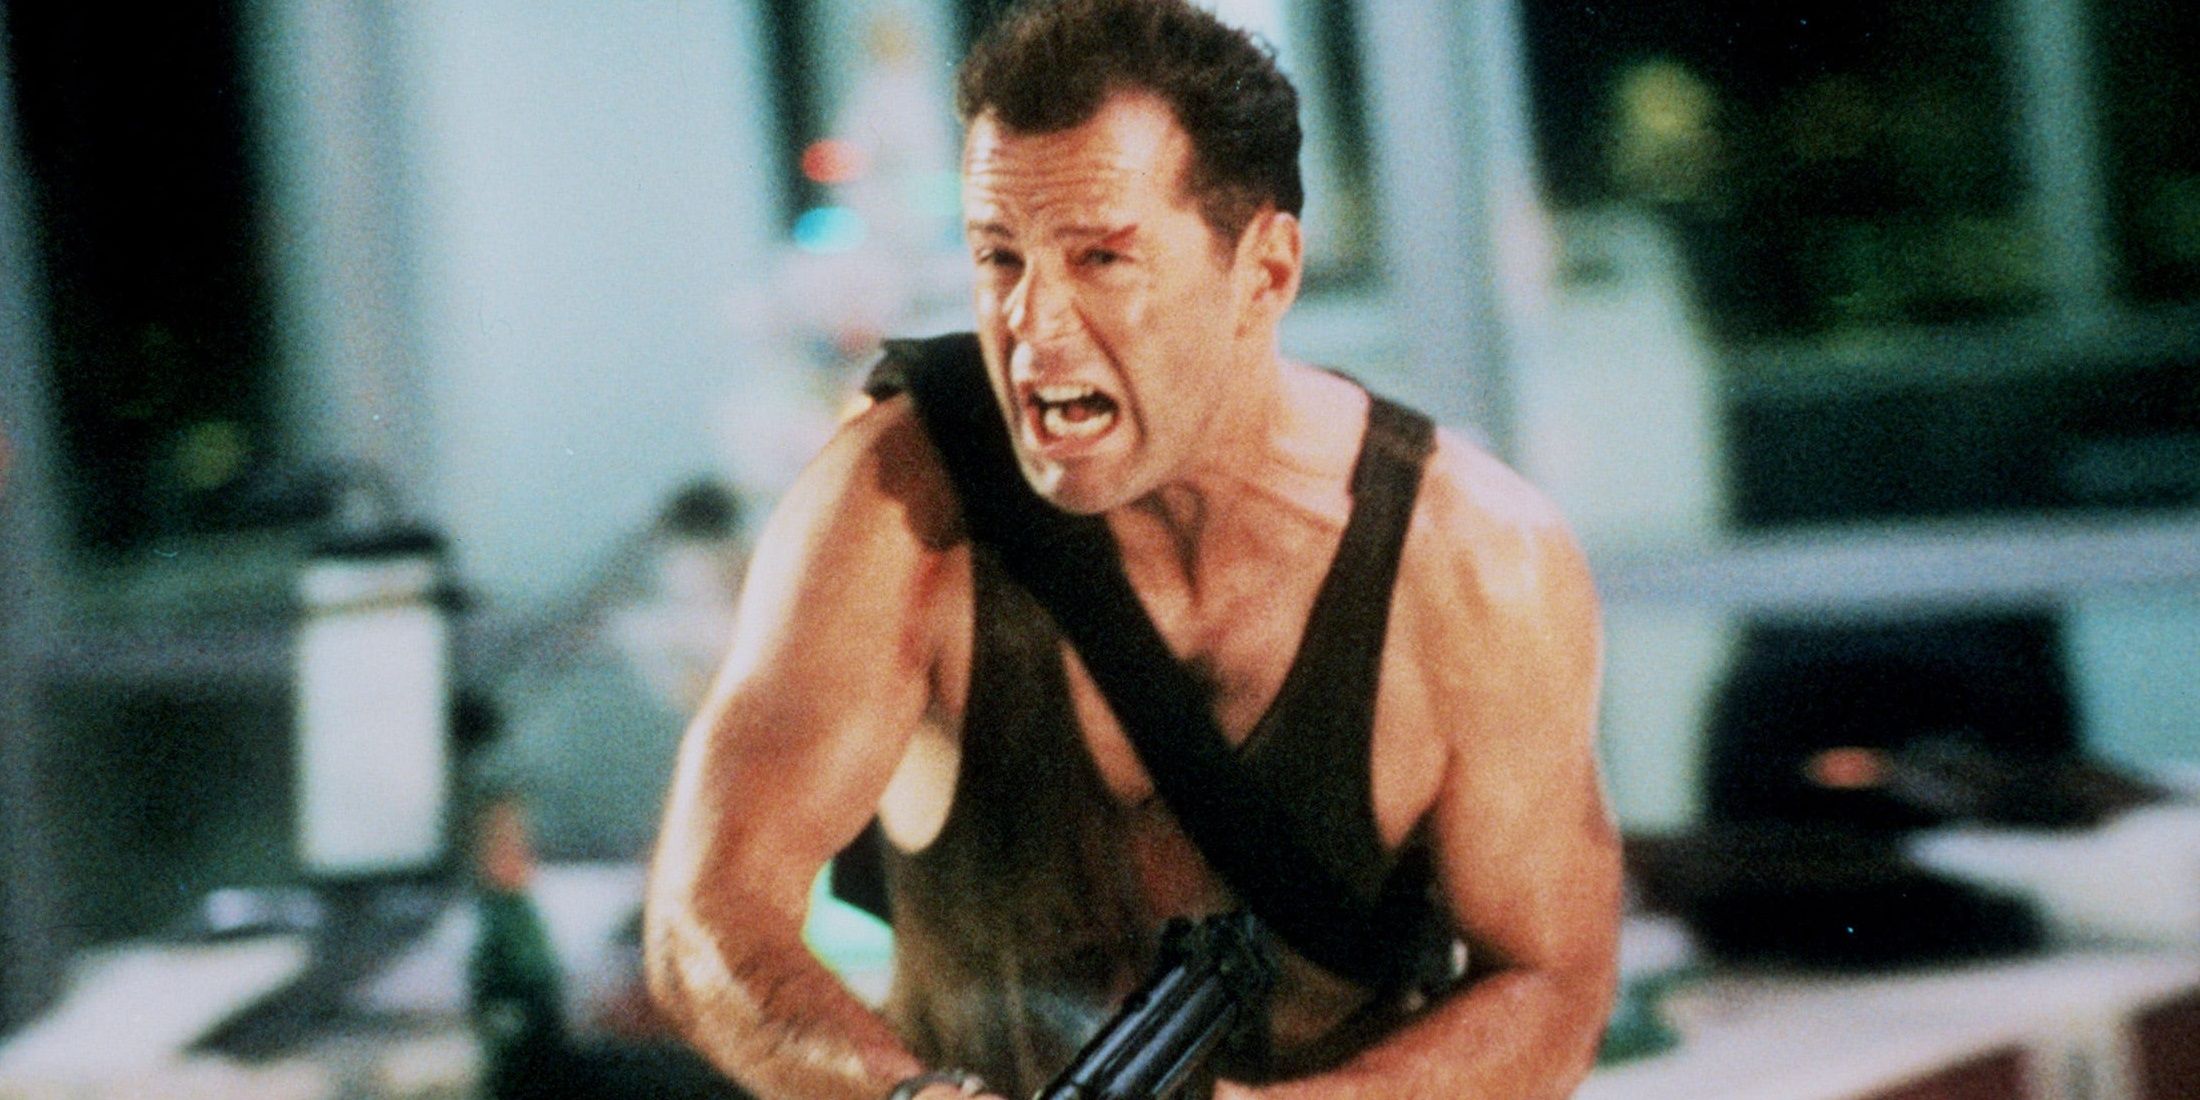 John McClane screaming with gun in Die Hard